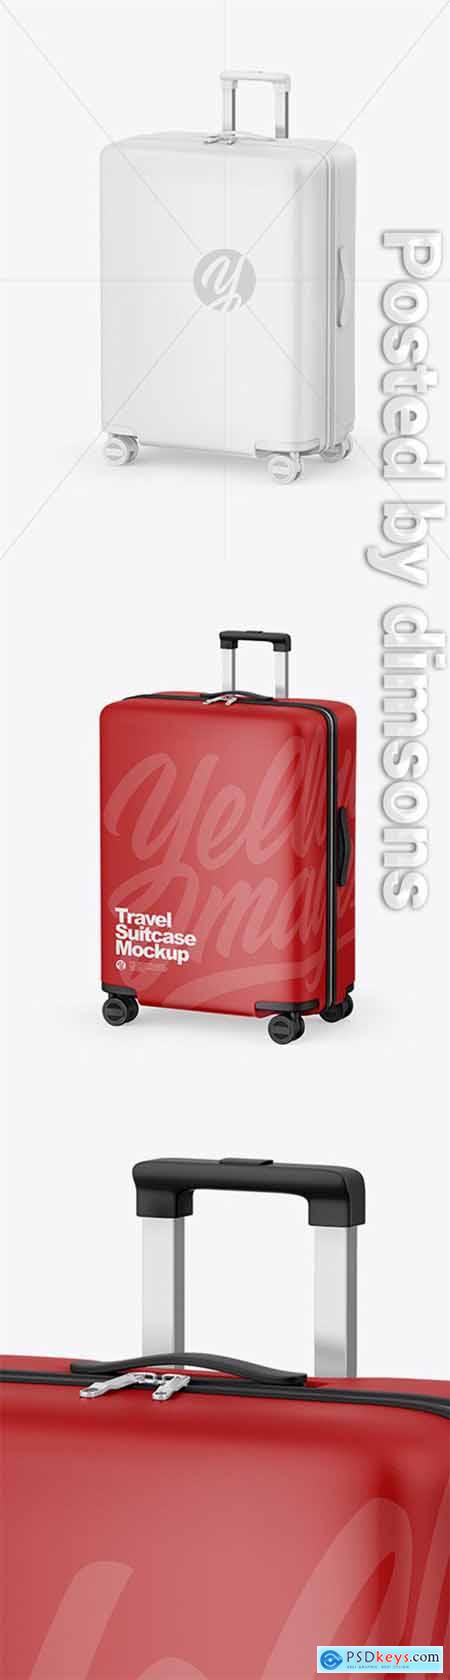 Matte Travel Suitcase Mockup 64901